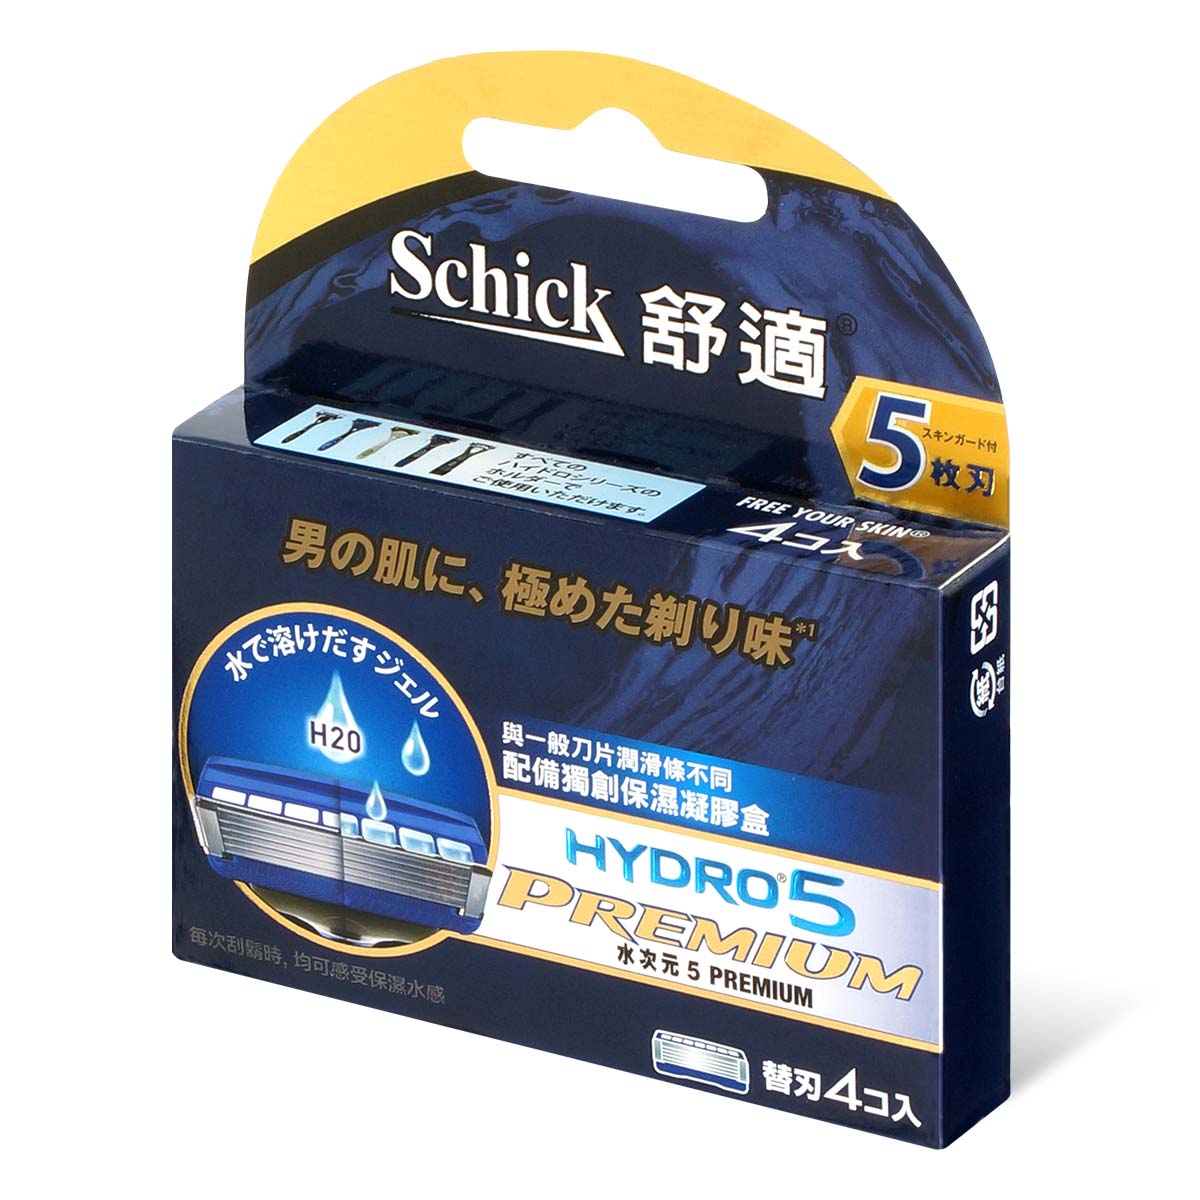 Schick 舒适 Hydro5 Premium 补充装刀片 4 片-p_1